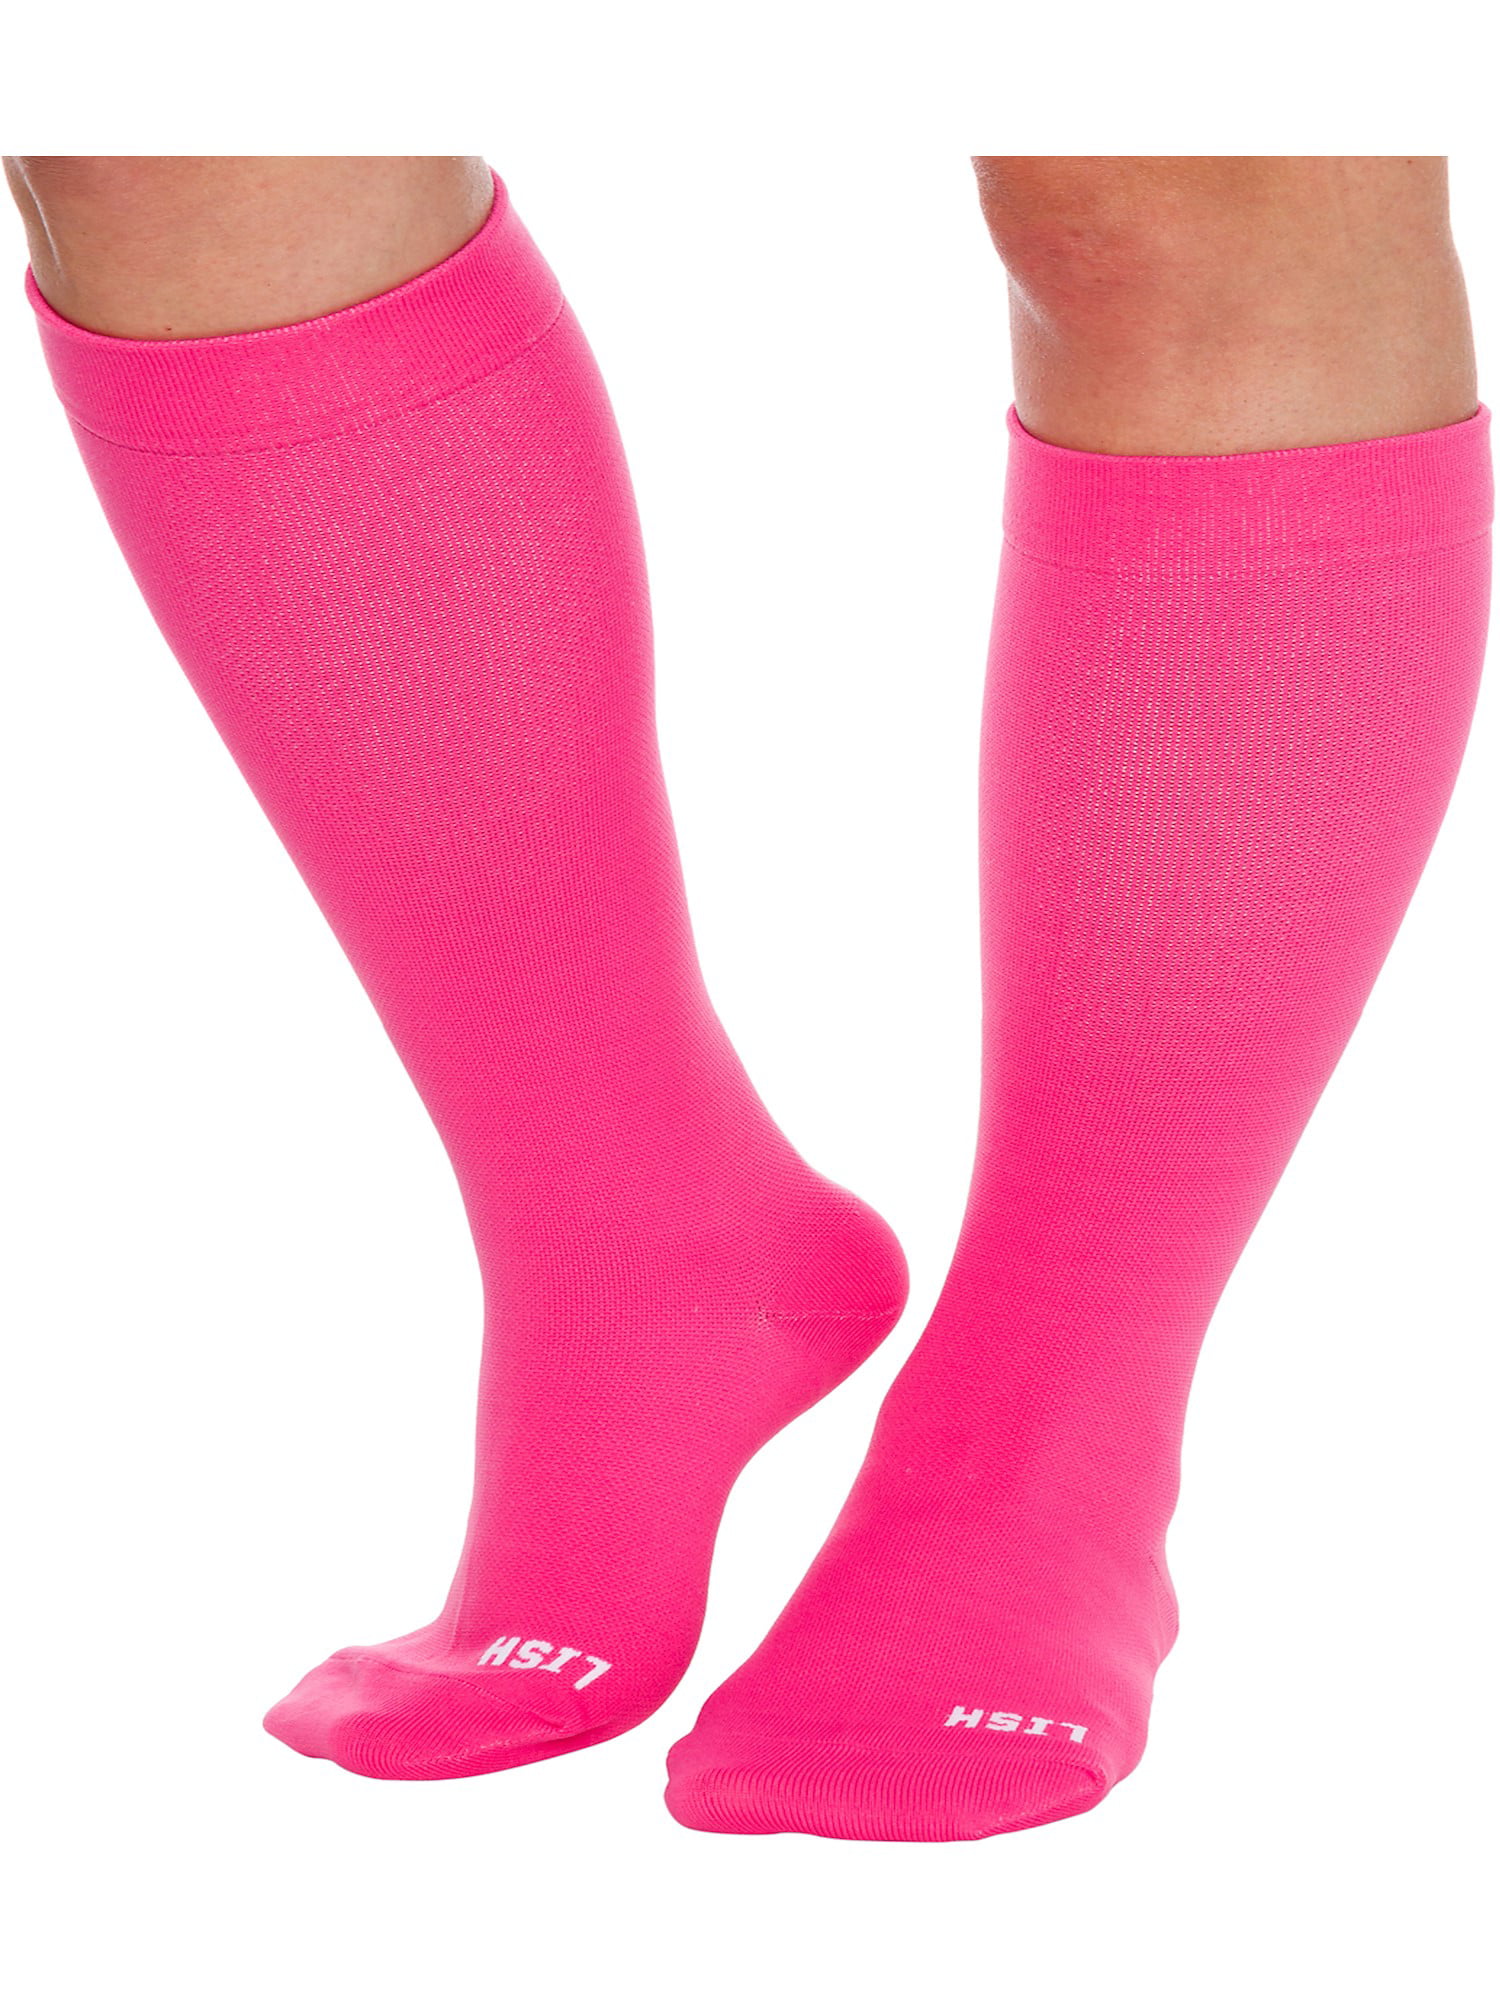 Plain Jane Wide Calf Compression Socks - Graduated 15-25 mmHg Knee High ...